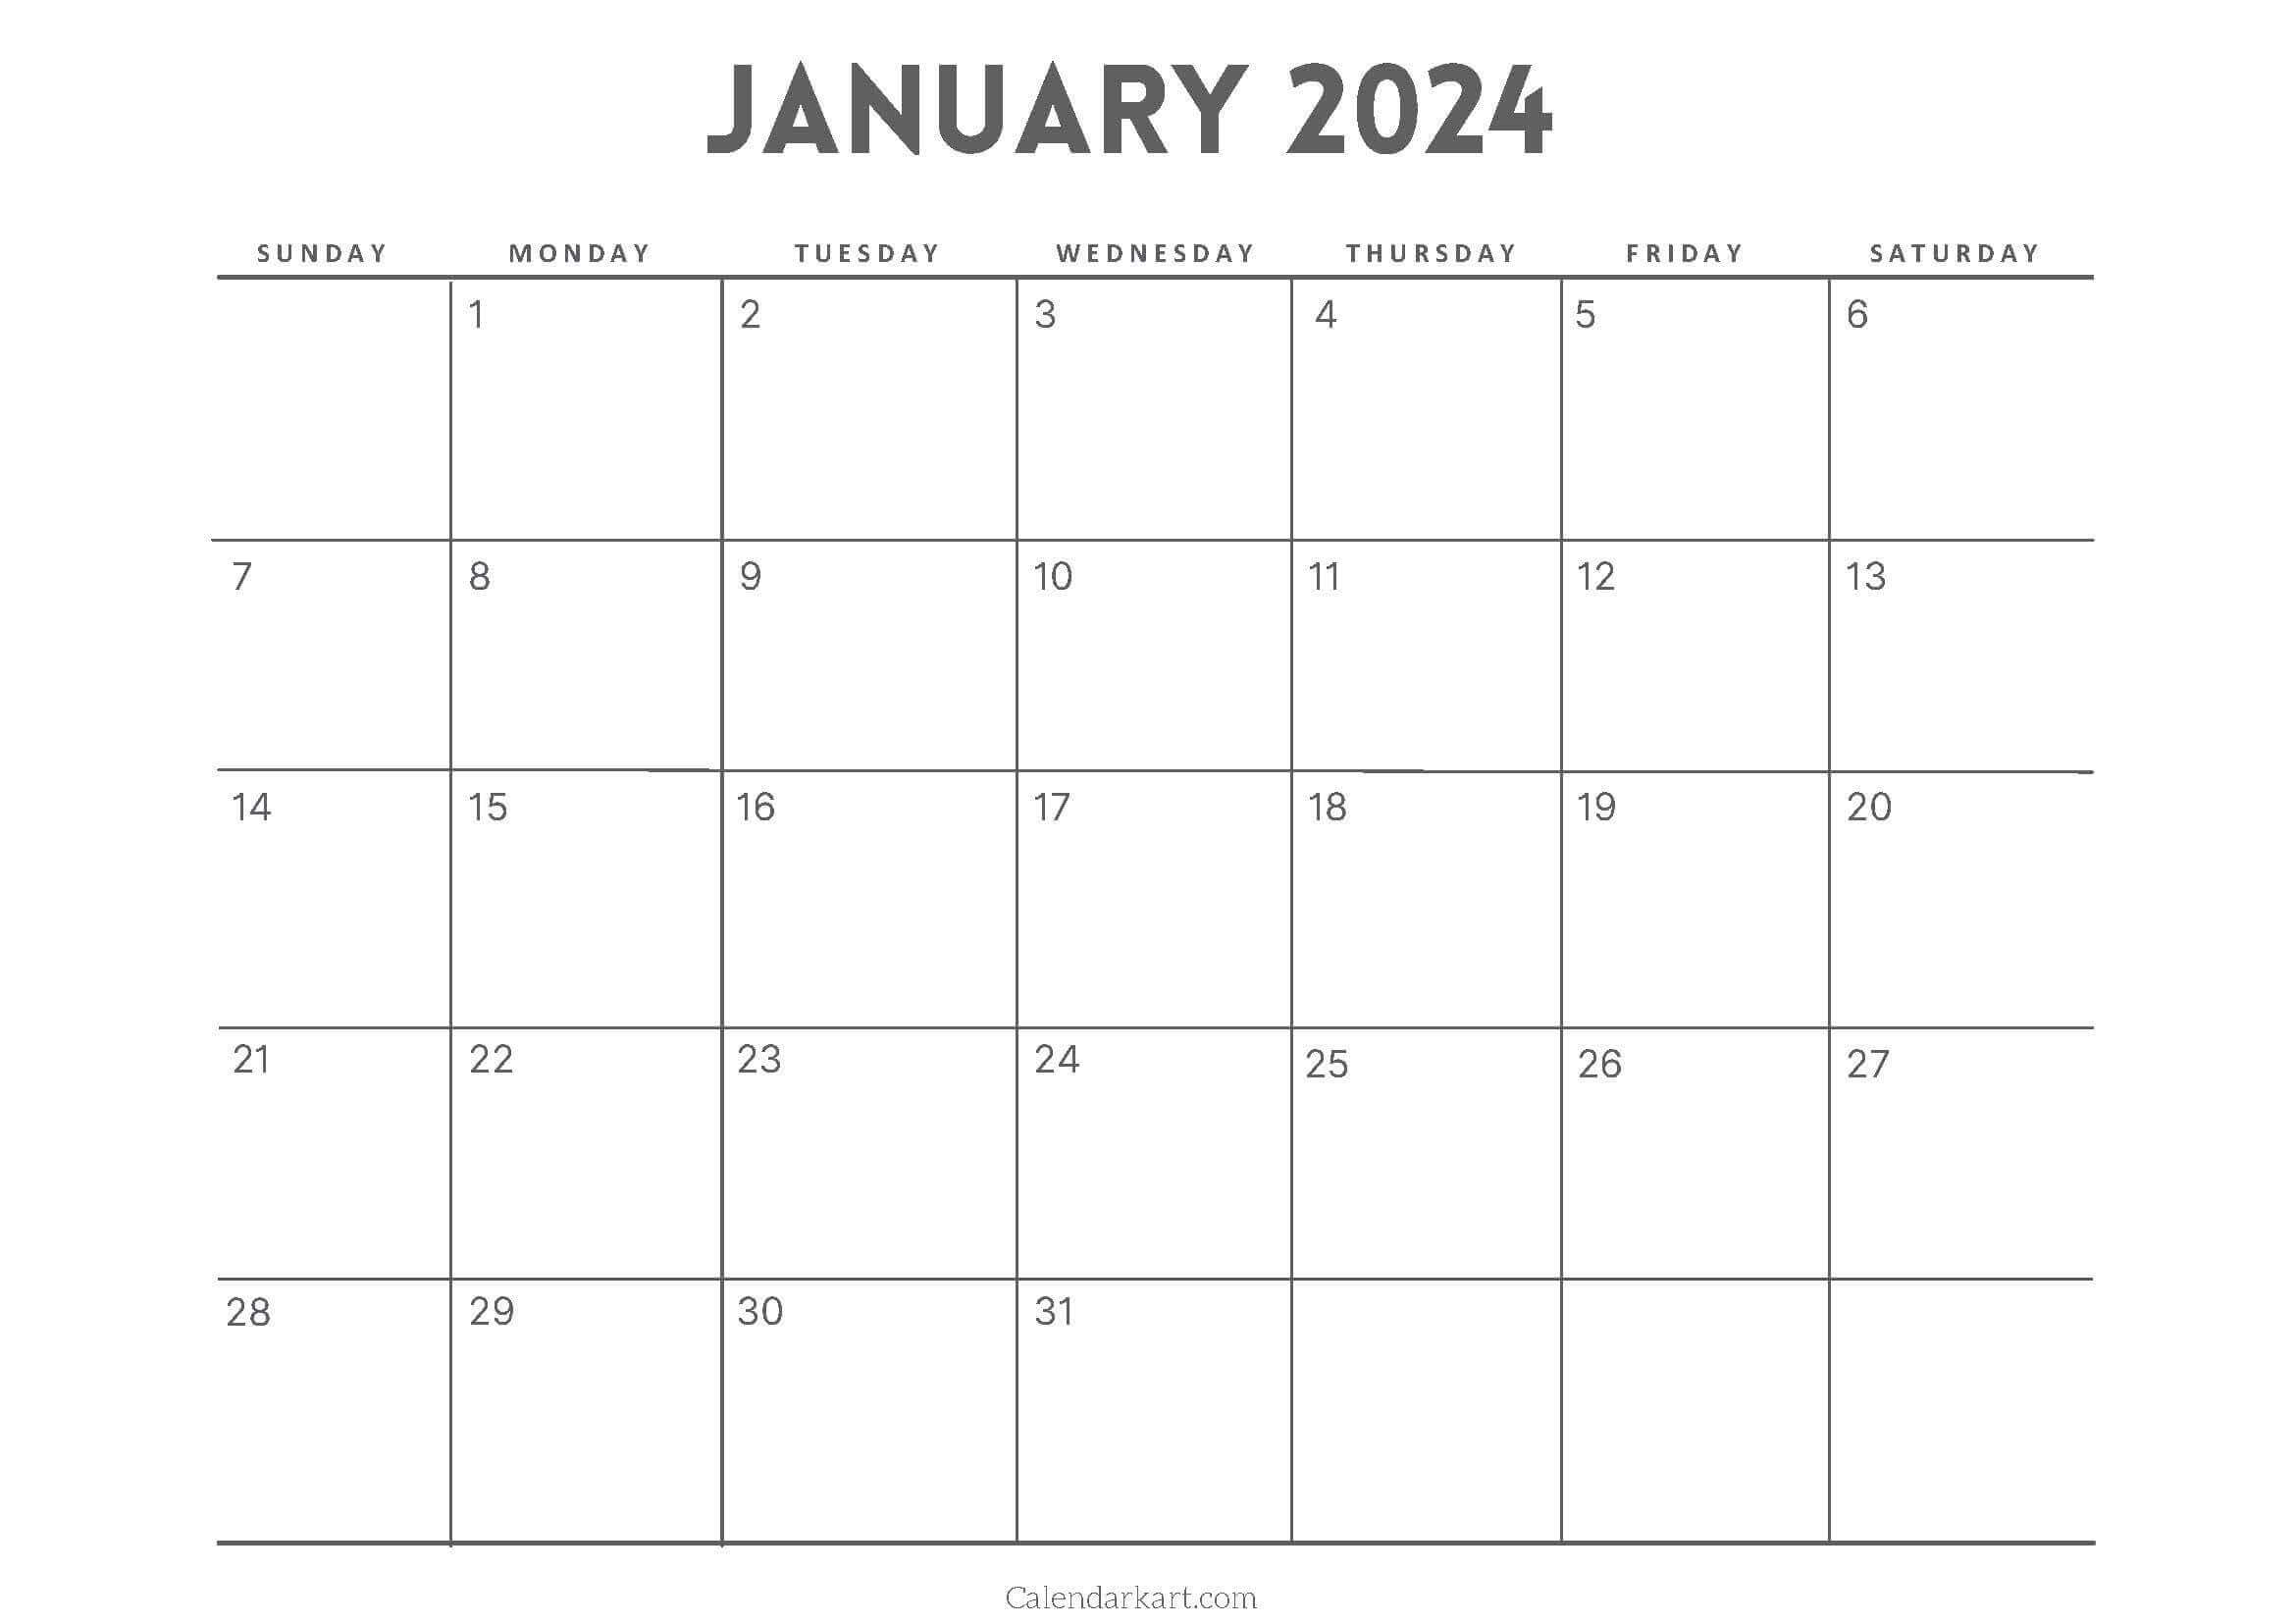 Free Printable January 2024 Calendars - Calendarkart | Printable Calendar 2024 Hp